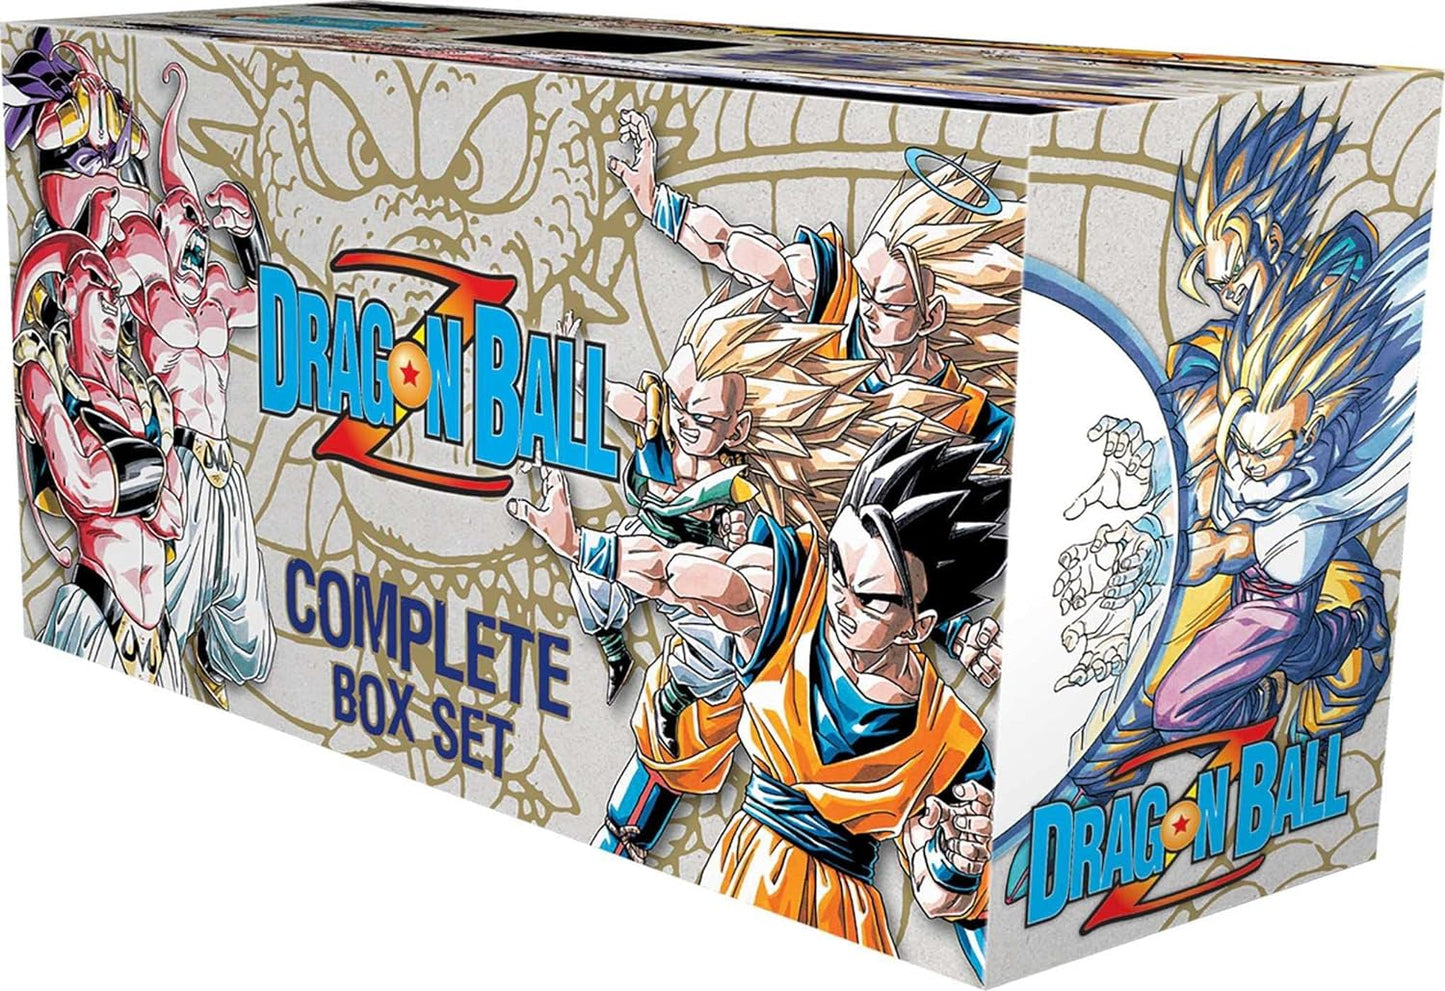 Dragonball Z Complete Box Set: Vols. 1-26